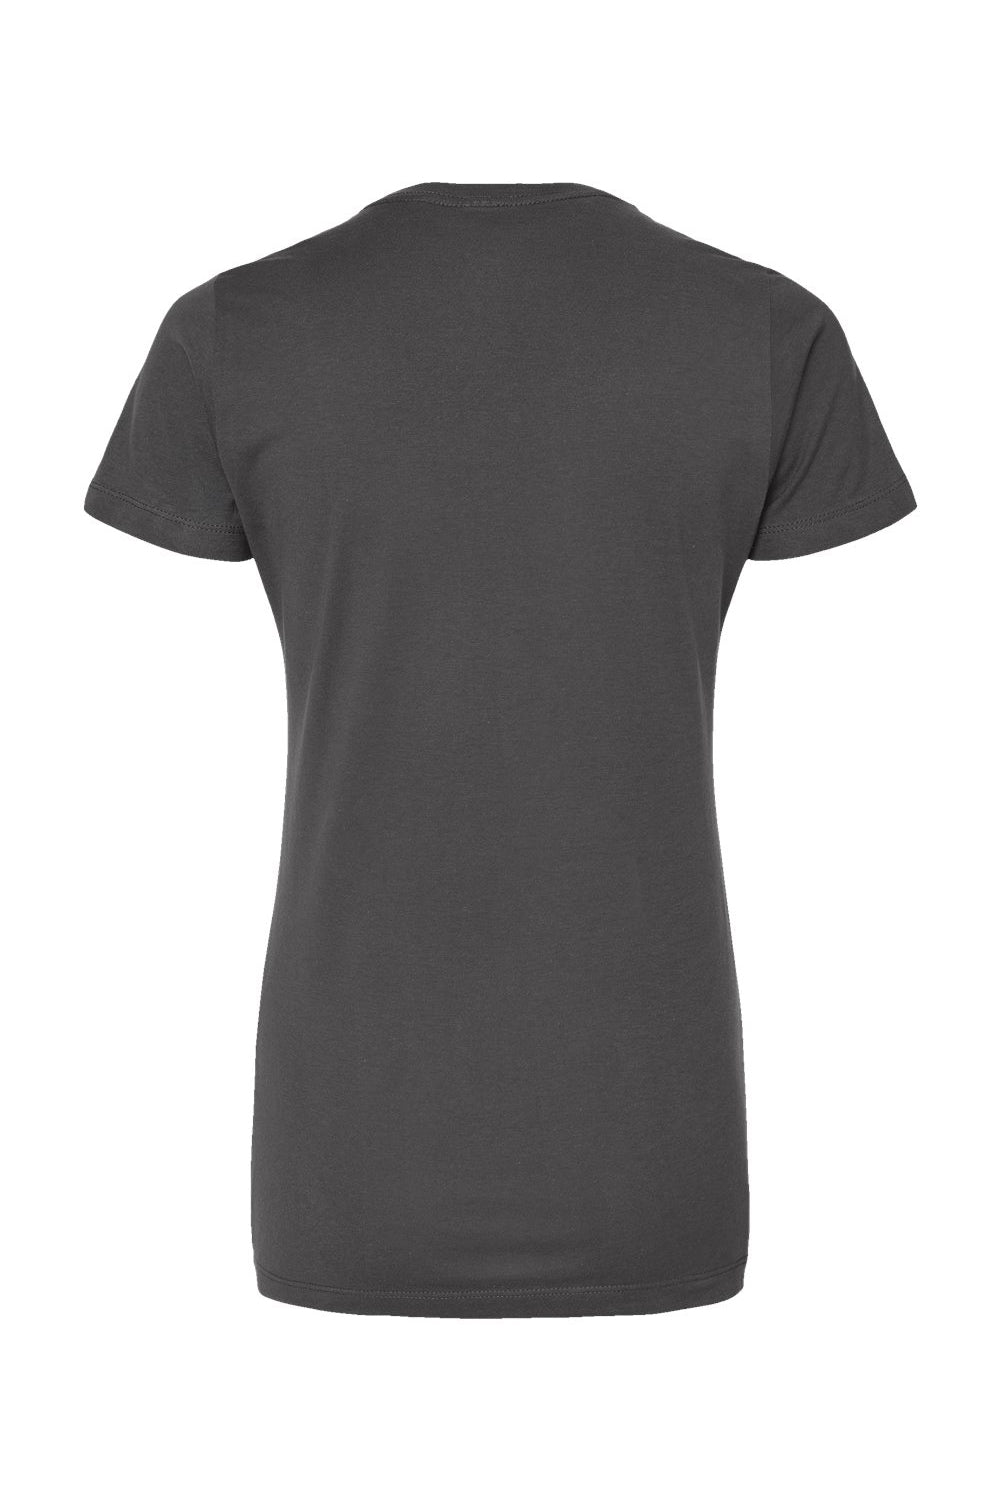 Tultex 516 Womens Premium Short Sleeve Crewneck T-Shirt Charcoal Grey Flat Back